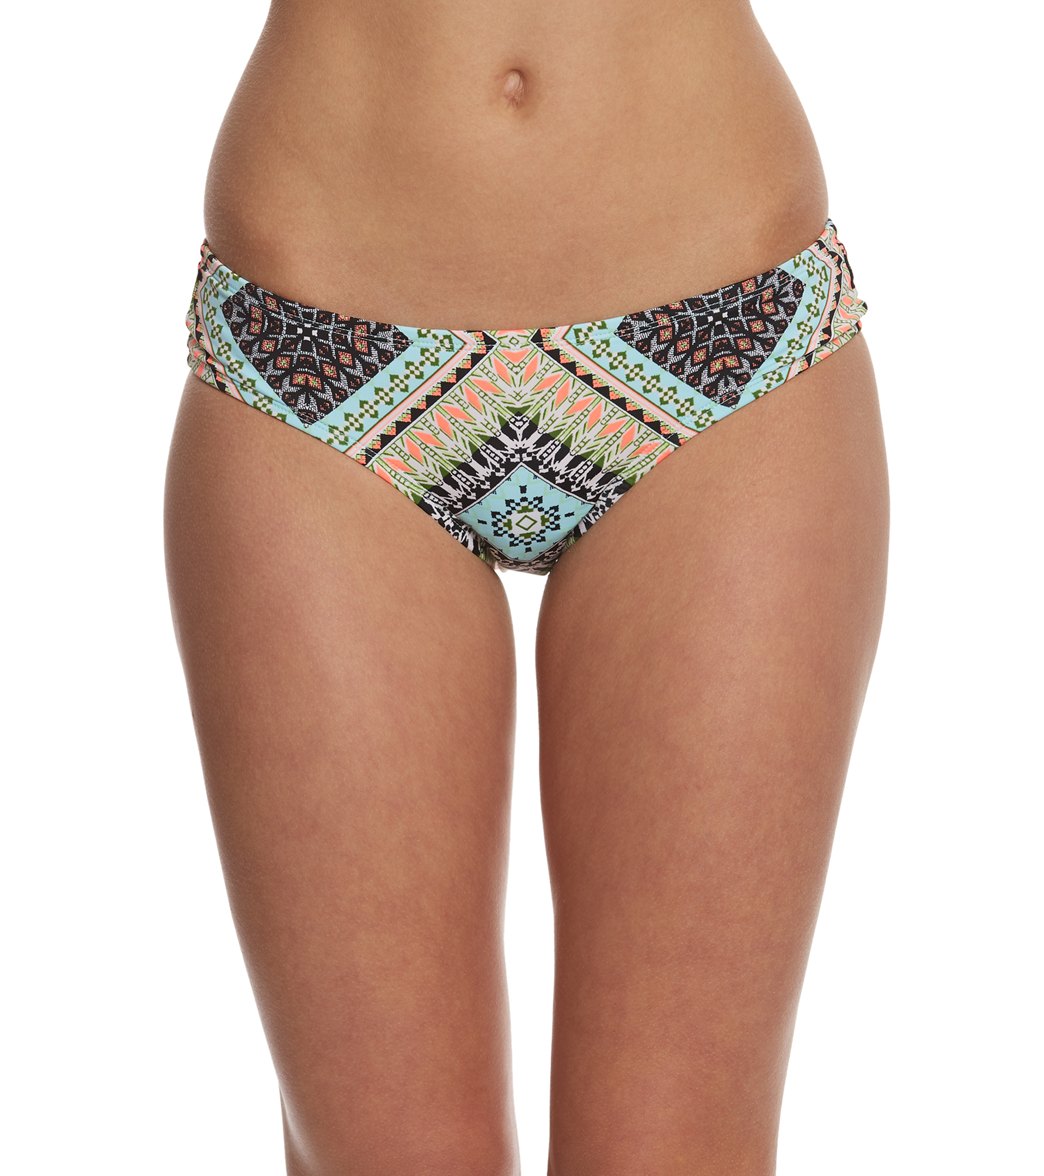 Hobie Swimwear Do Or Diamond Skimpy Hipster Bikini Bottom - Multi Xl Polyester - Swimoutlet.com